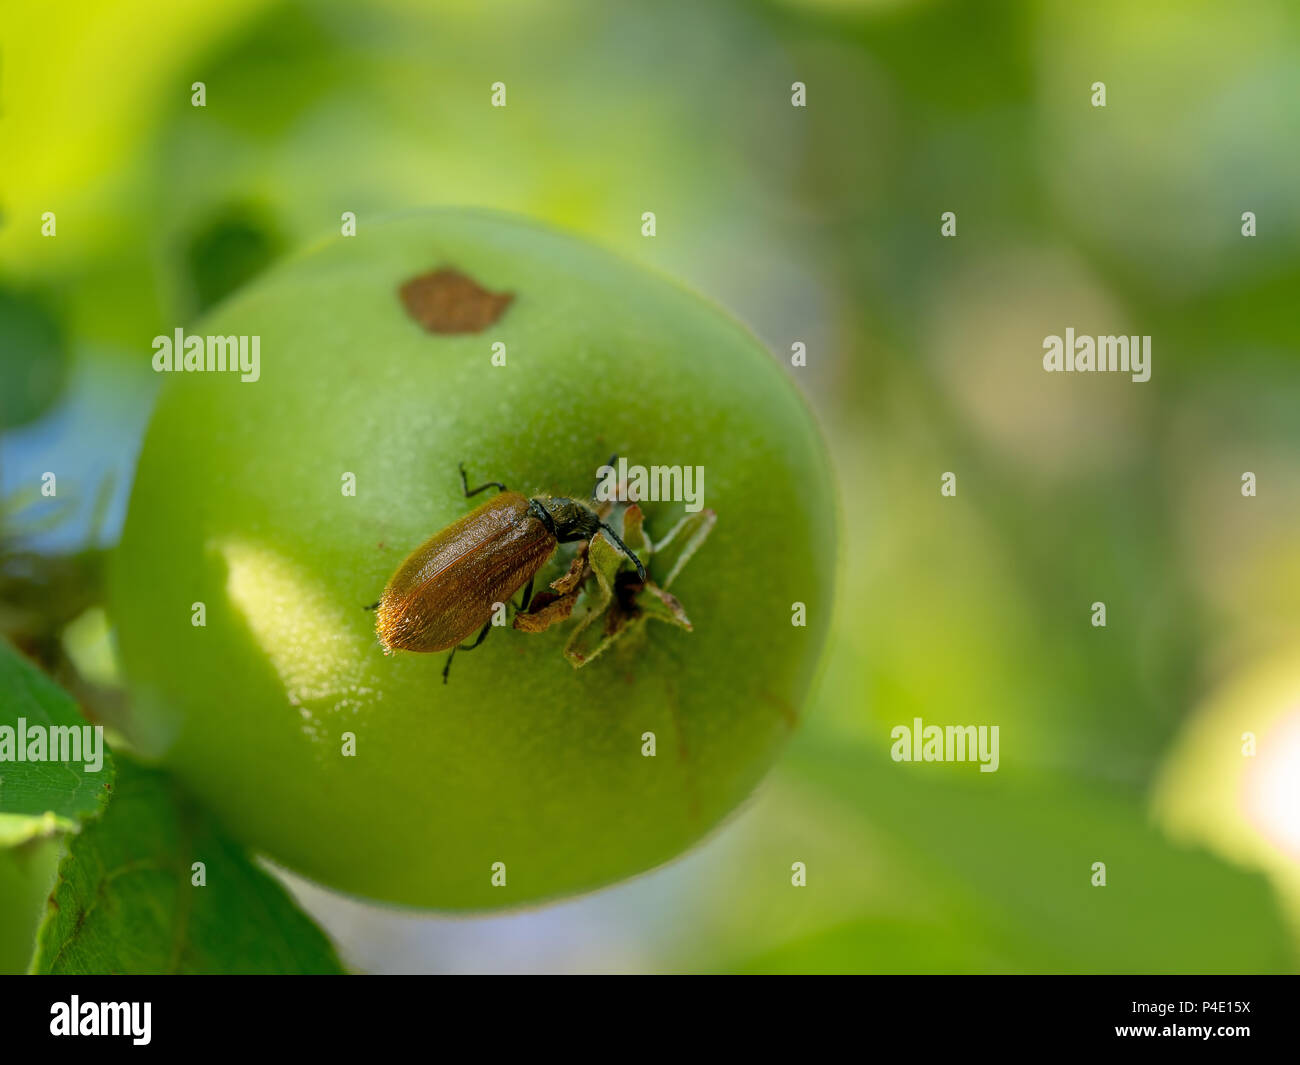 Lagria hirta beetle eating growing apple. Stock Photo